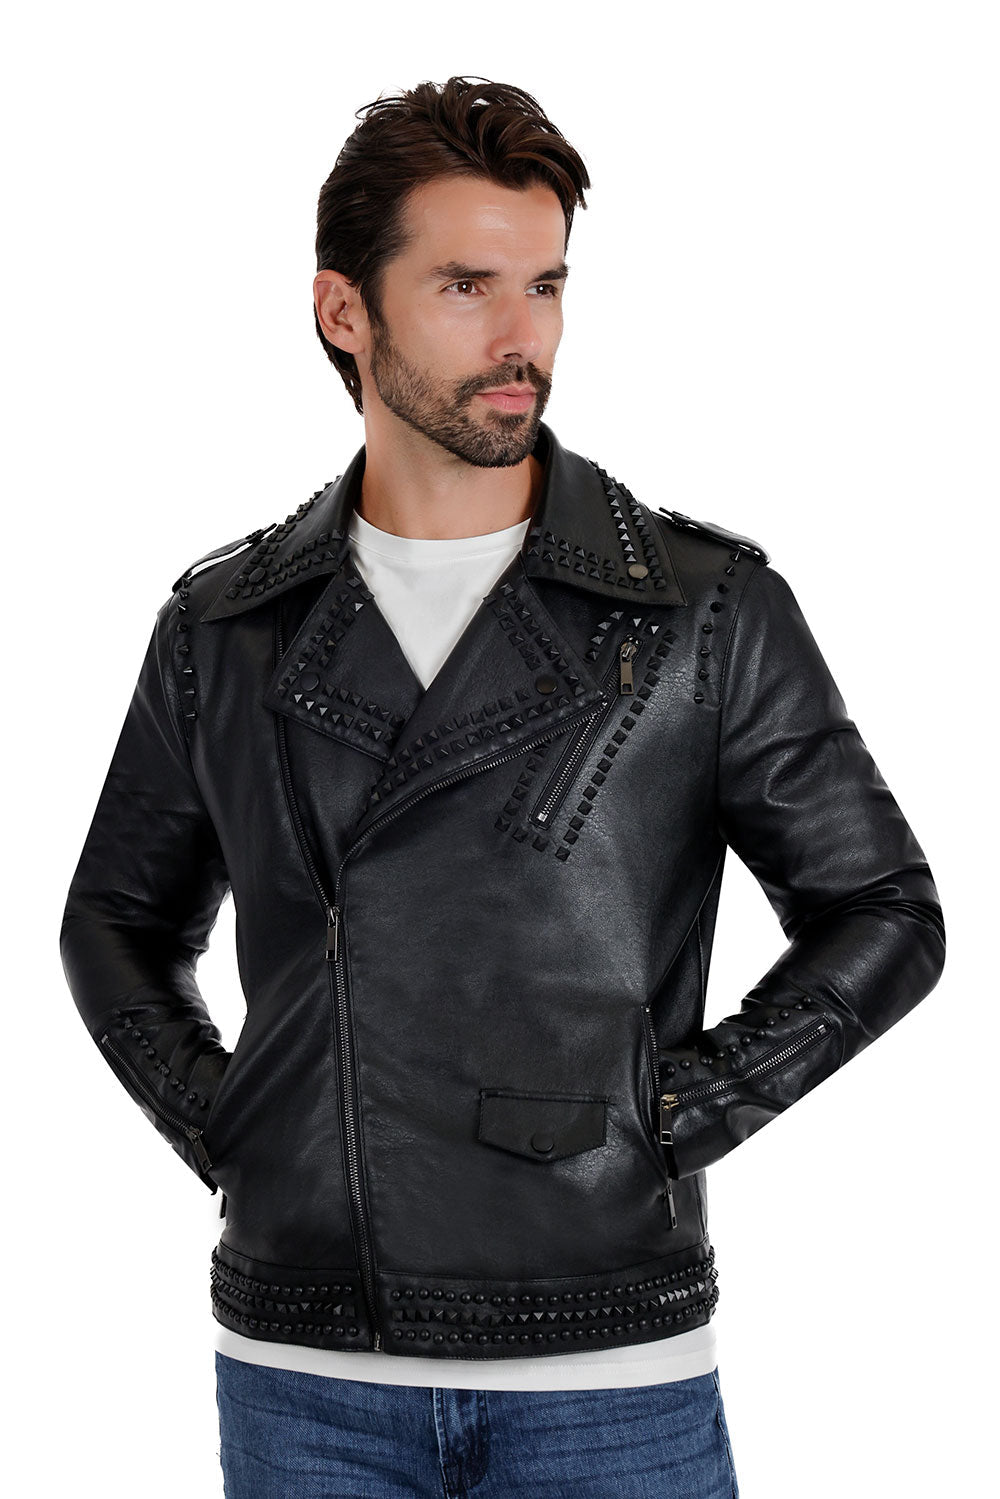 Barabas Men's Spiked Motorcycle Biker Faux Leather Jacket 3JPU26 Black Black